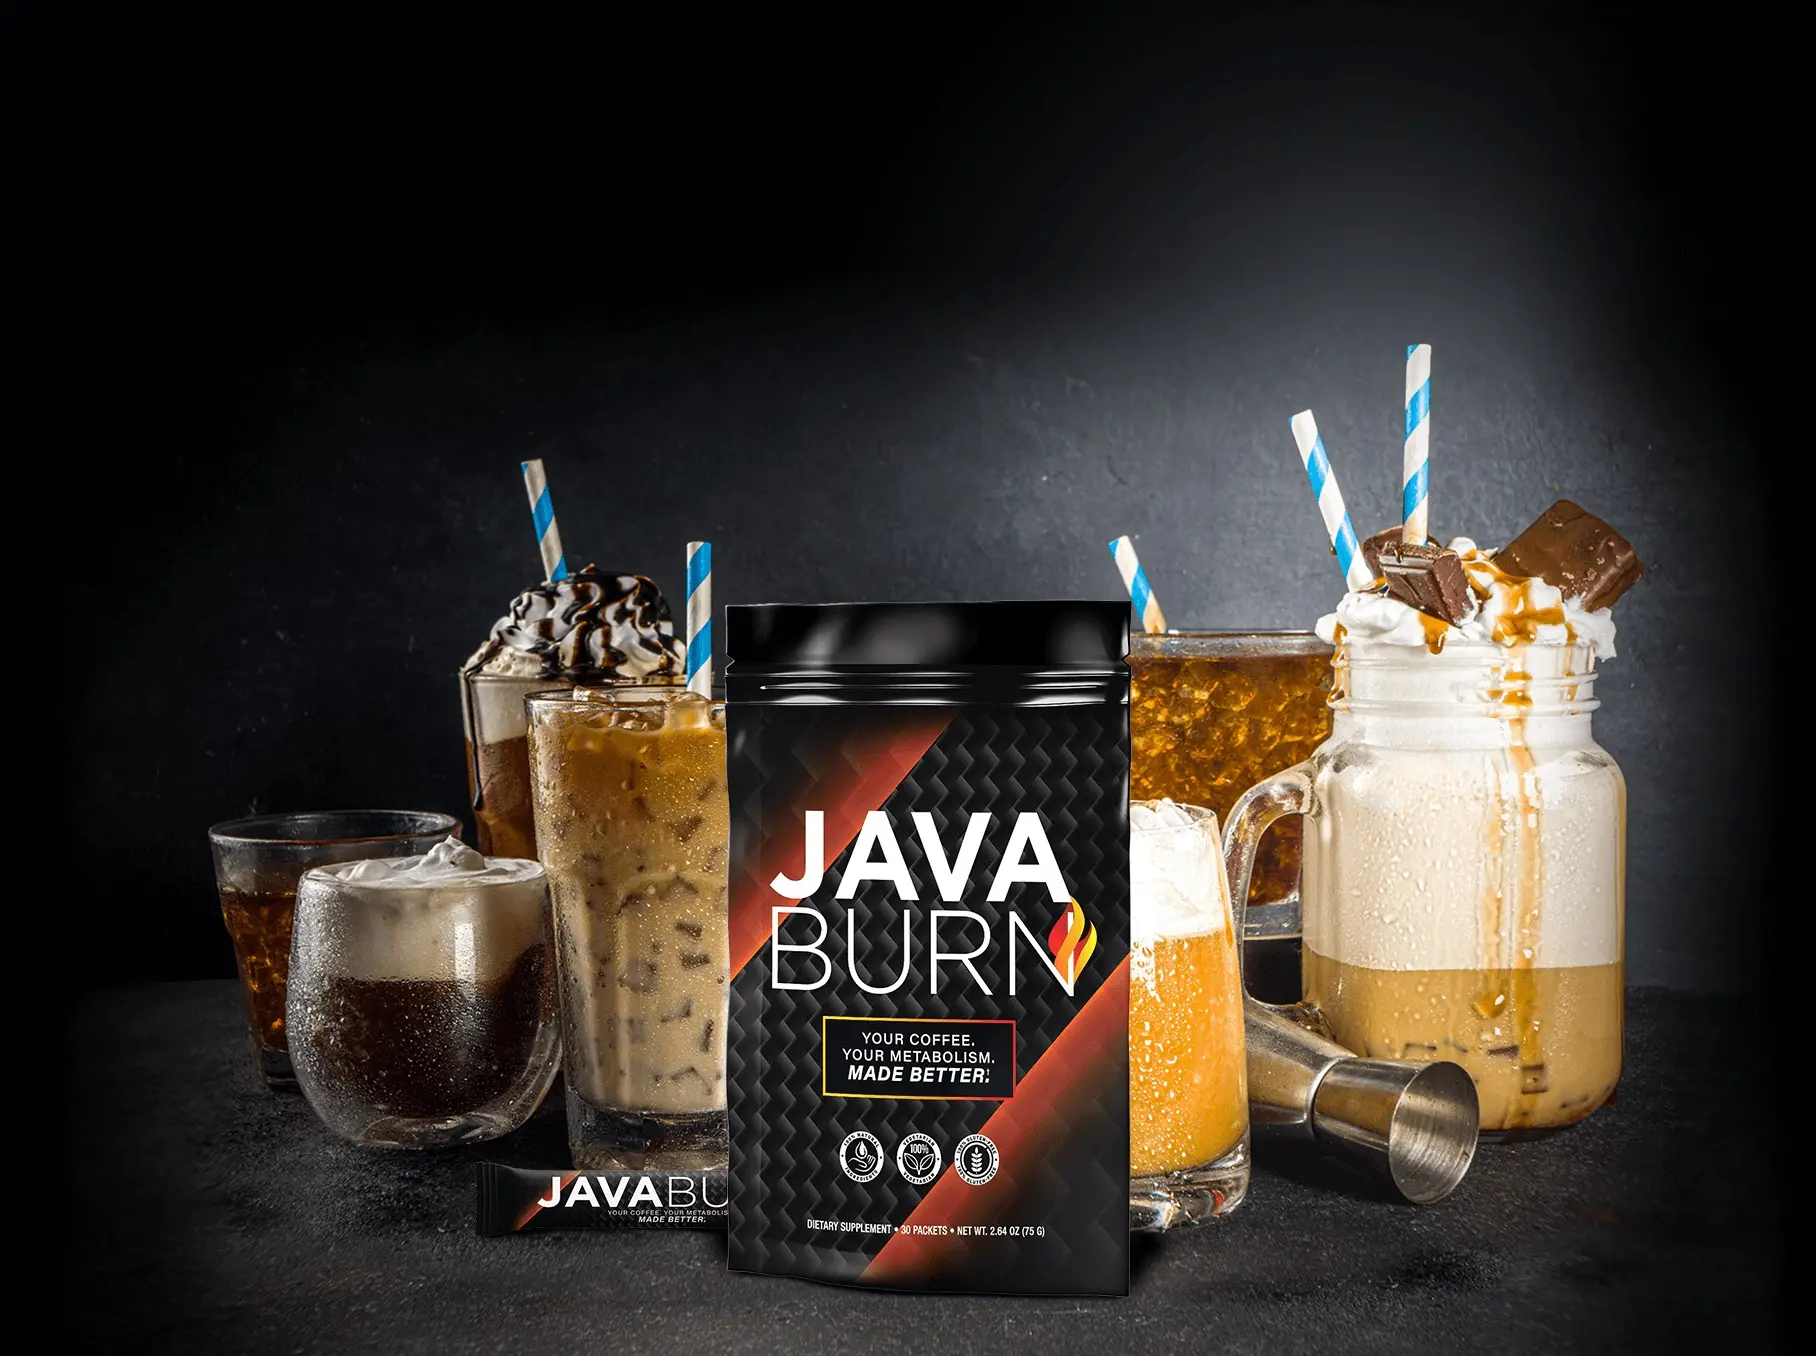 Java Burn indredients